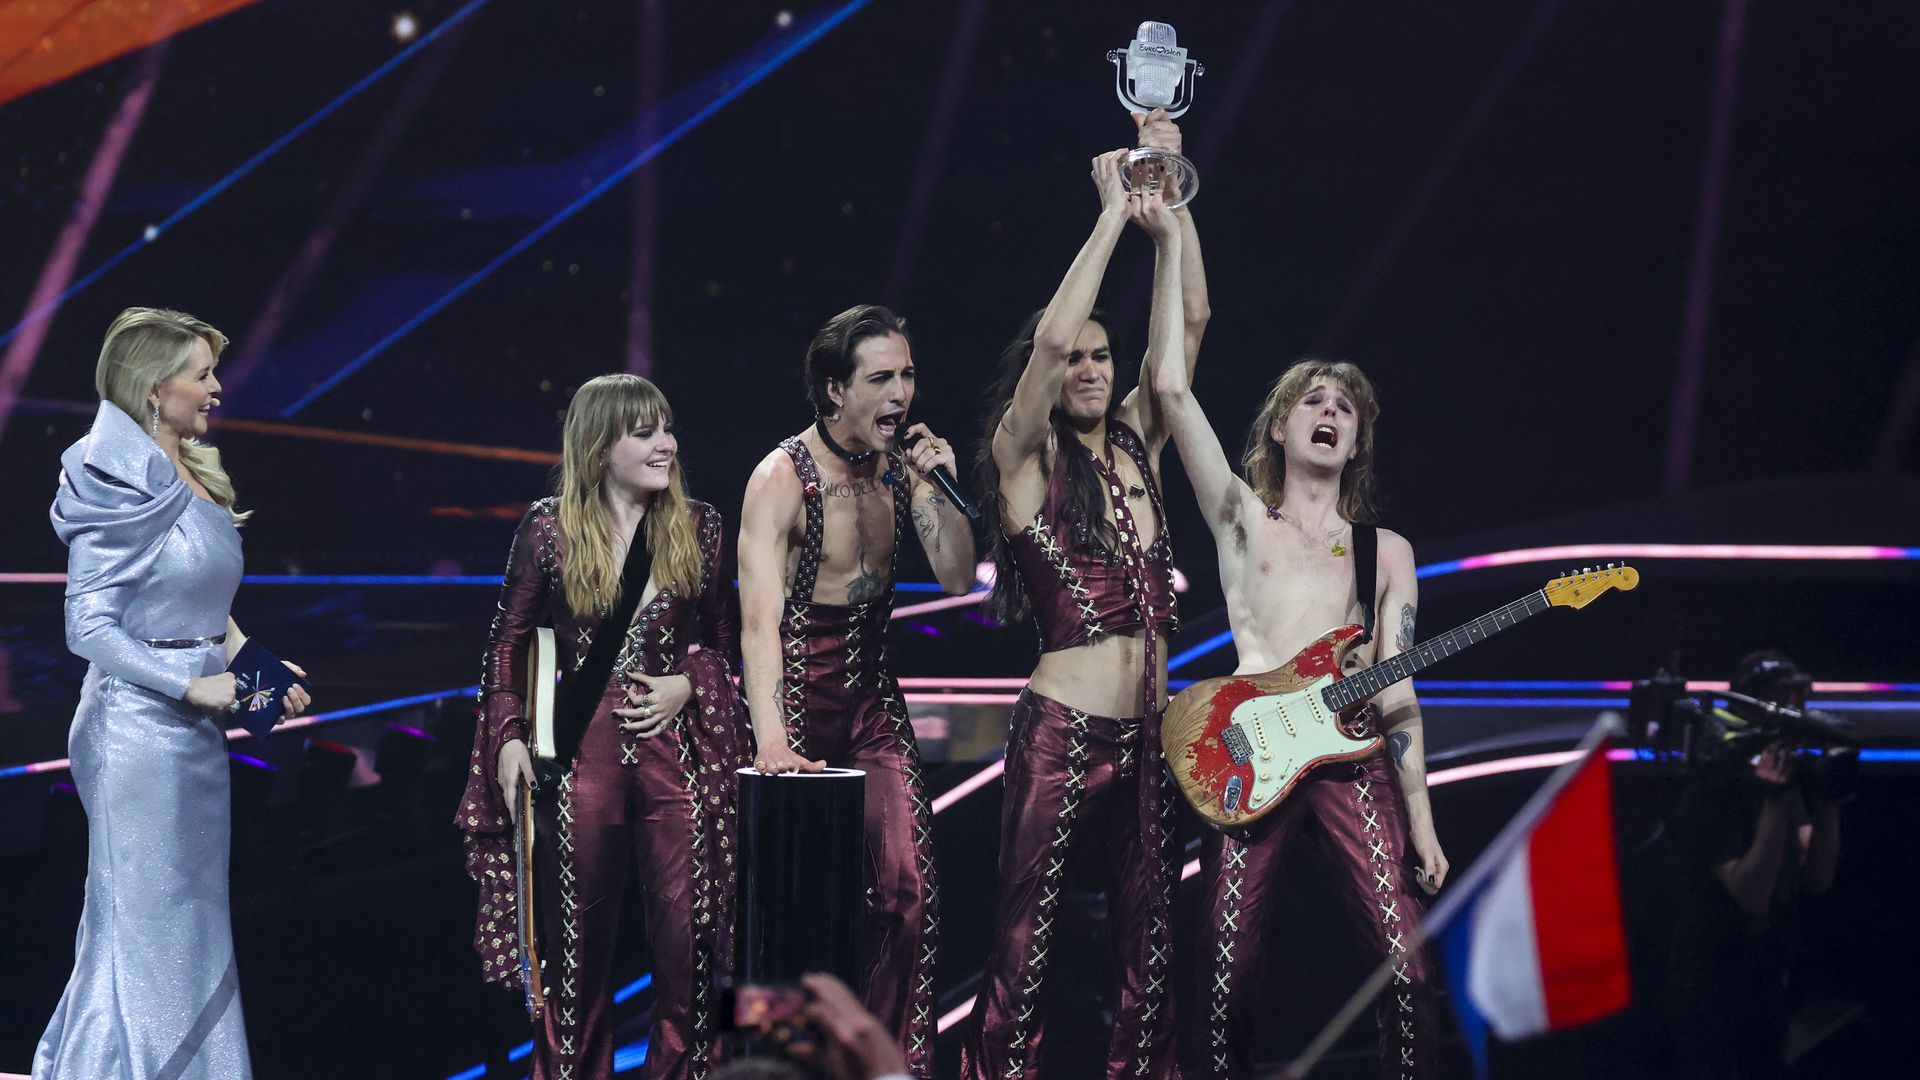 Eurovision: Måneskin wins as song contest returns amid COVID precautions